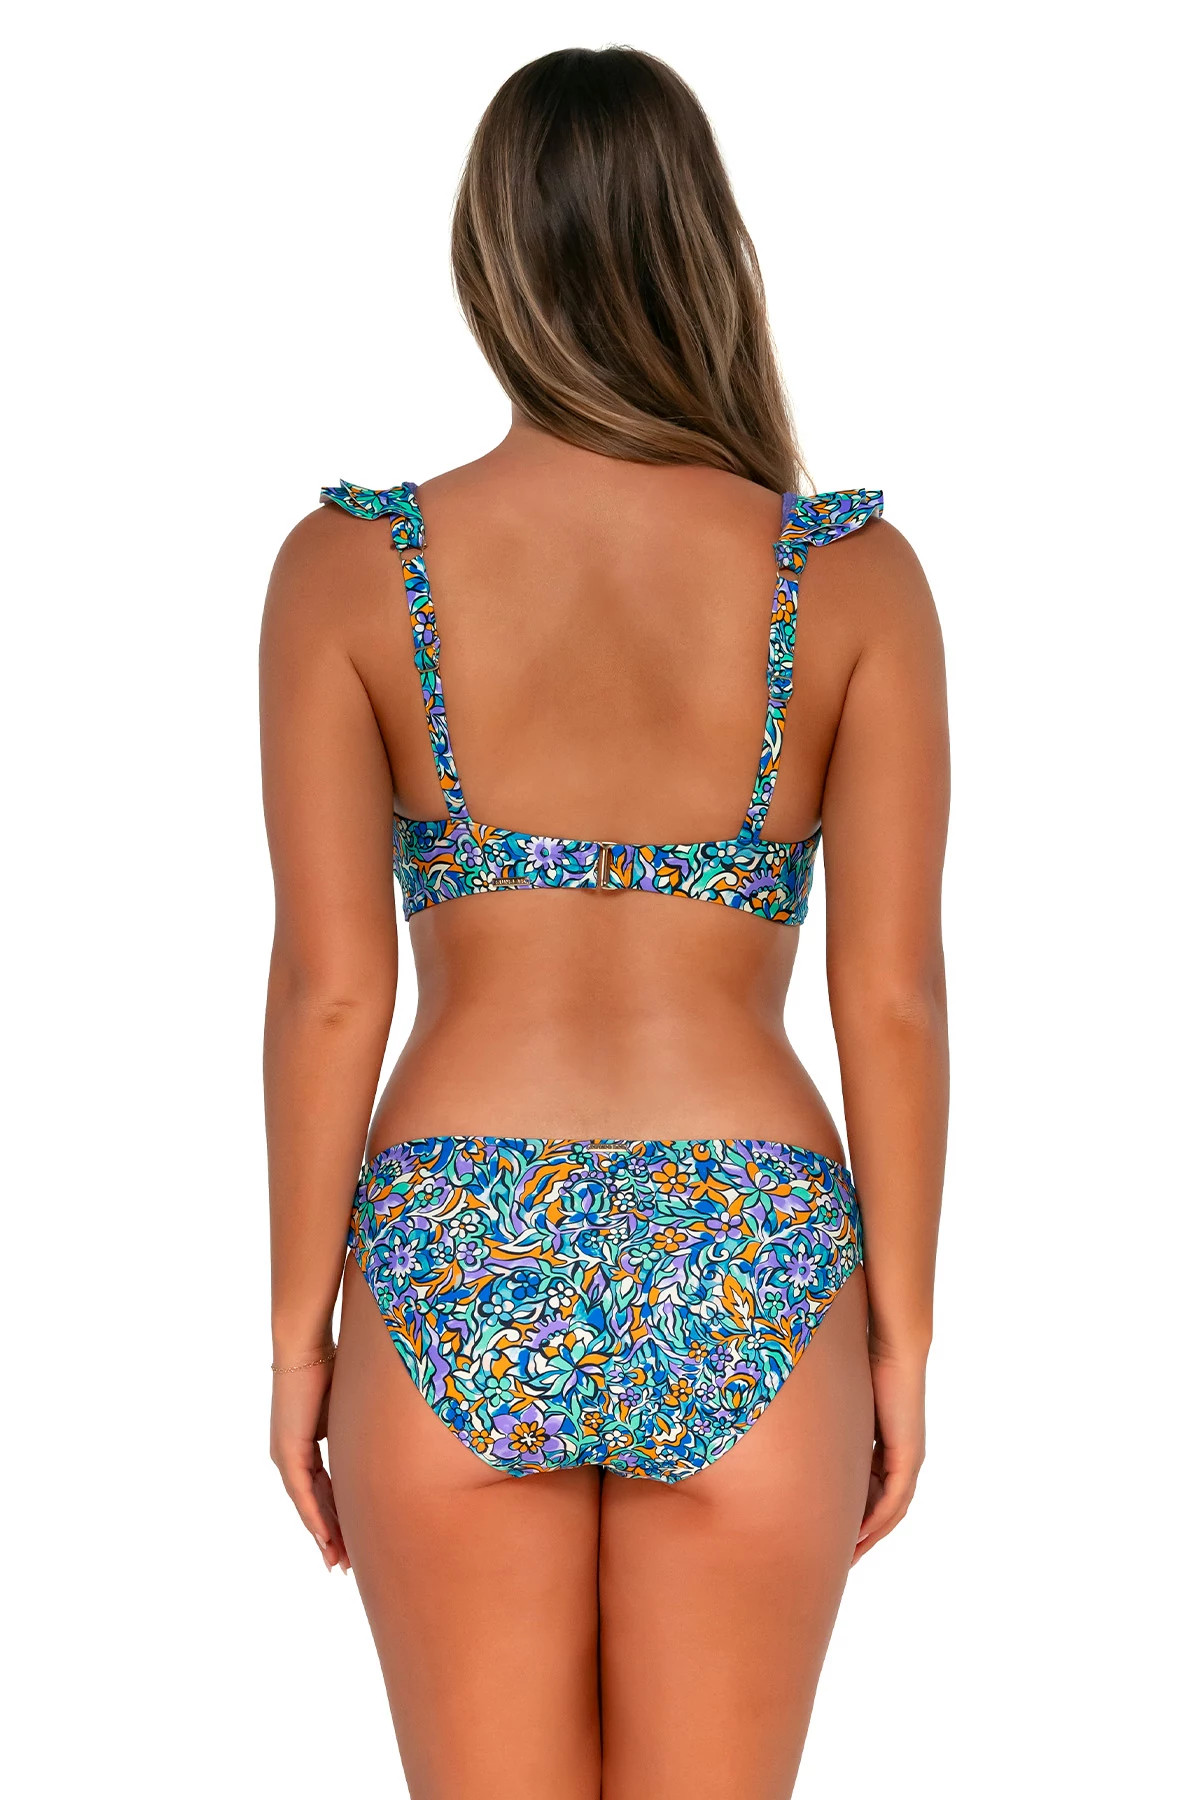 PANSY FIELDS Willa Wireless Bralette Bikini Top (D+ Cup) image number 2